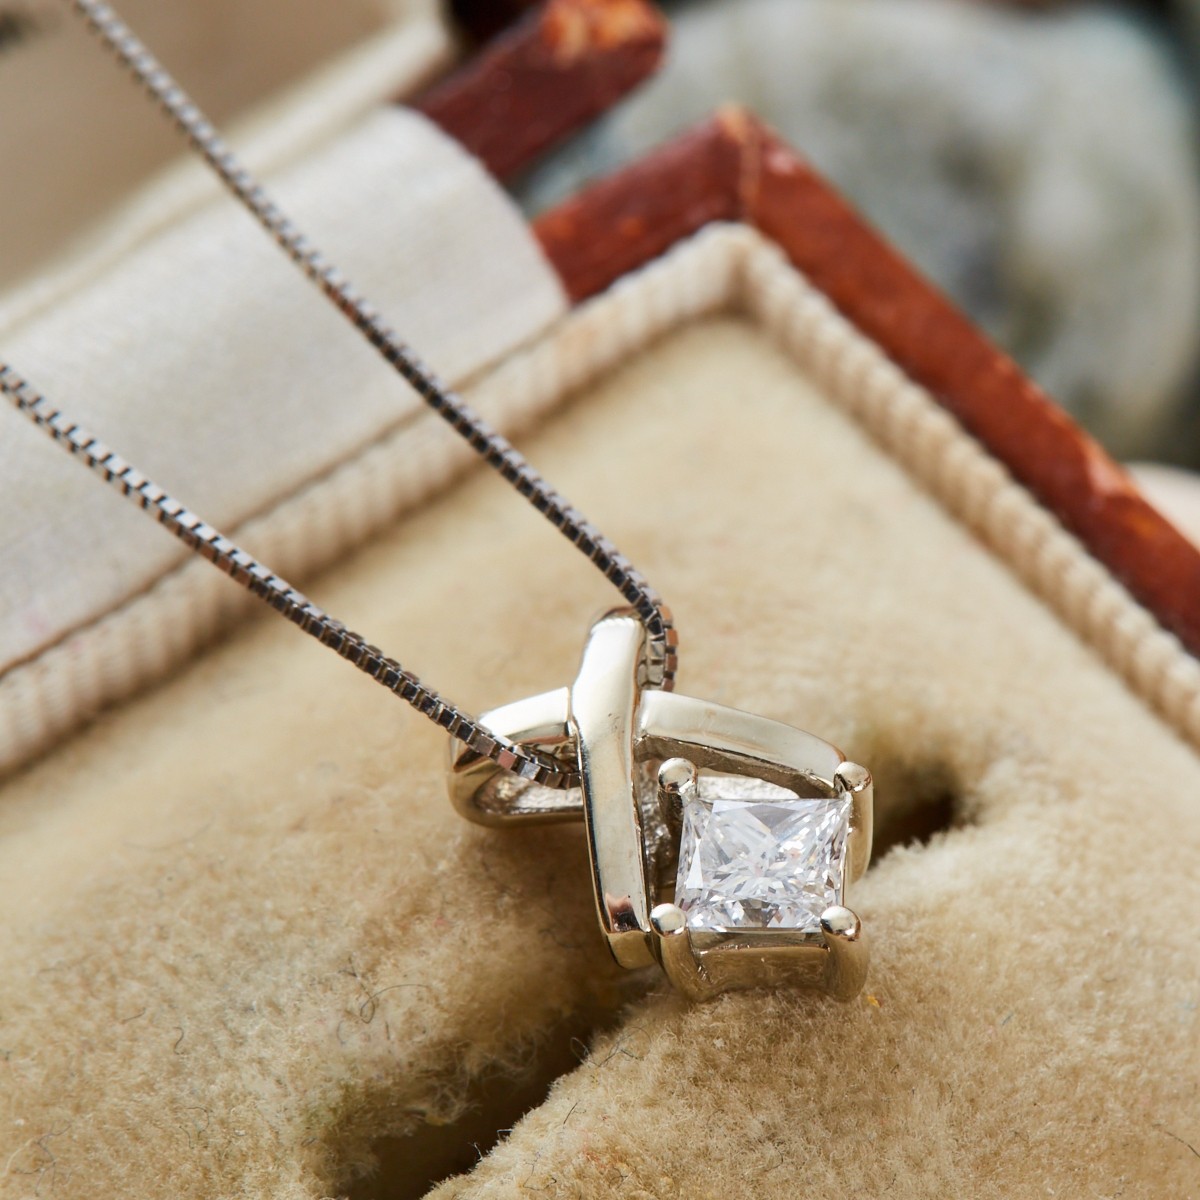 NEW 14K WG WHITE GOLD 1 CARAT PRINCESS CUT DIAMOND PENDANT CABLE CHAIN  NECKLACE | eBay